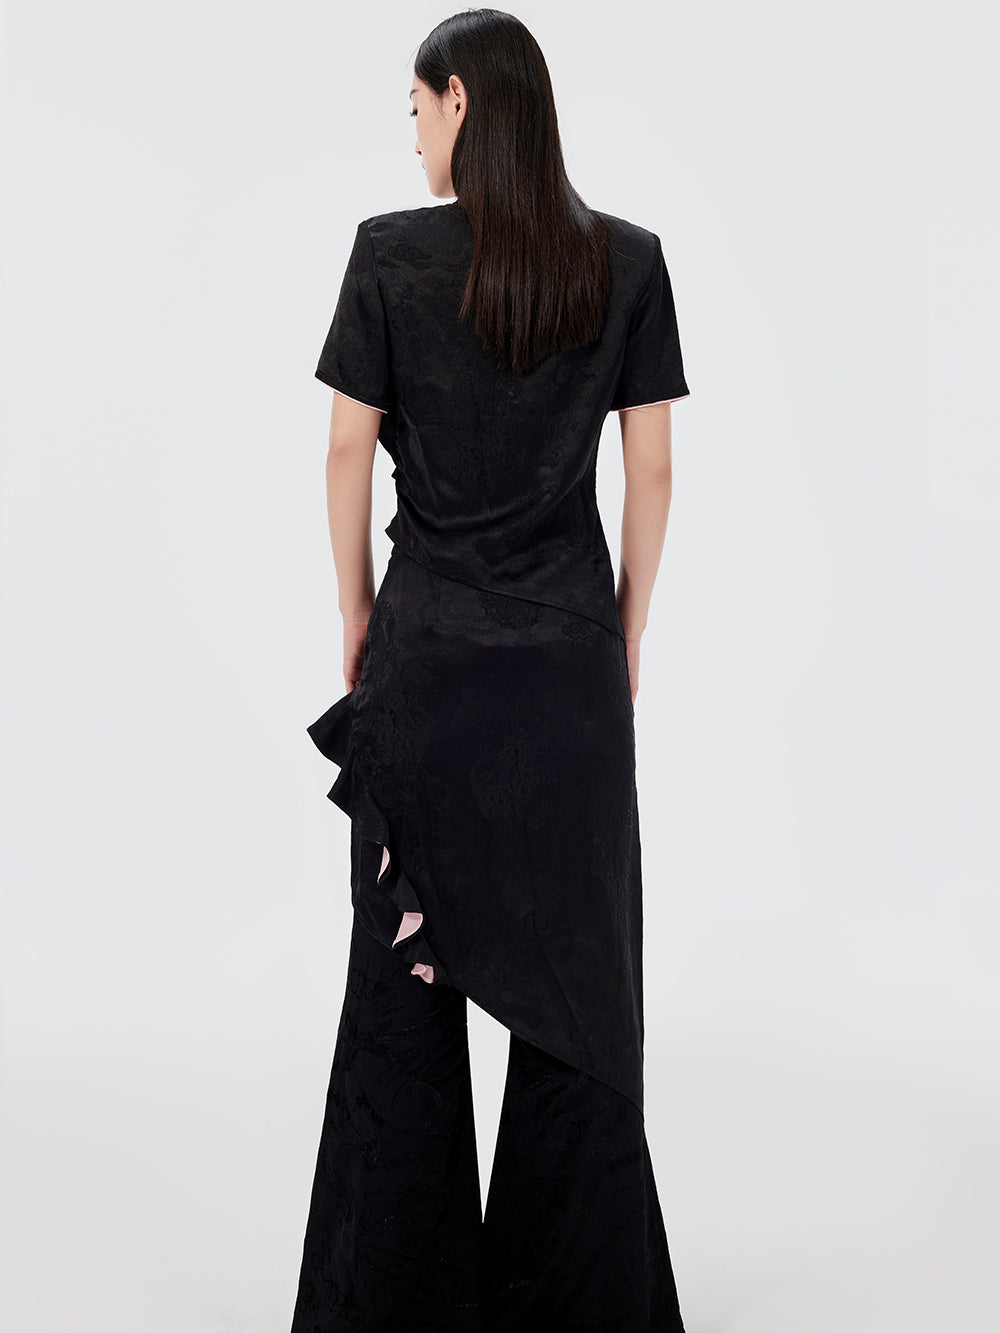 MUKZIN Black Slim Fit Jacquard Sequined Chinese Style Cheongsam T-shirt